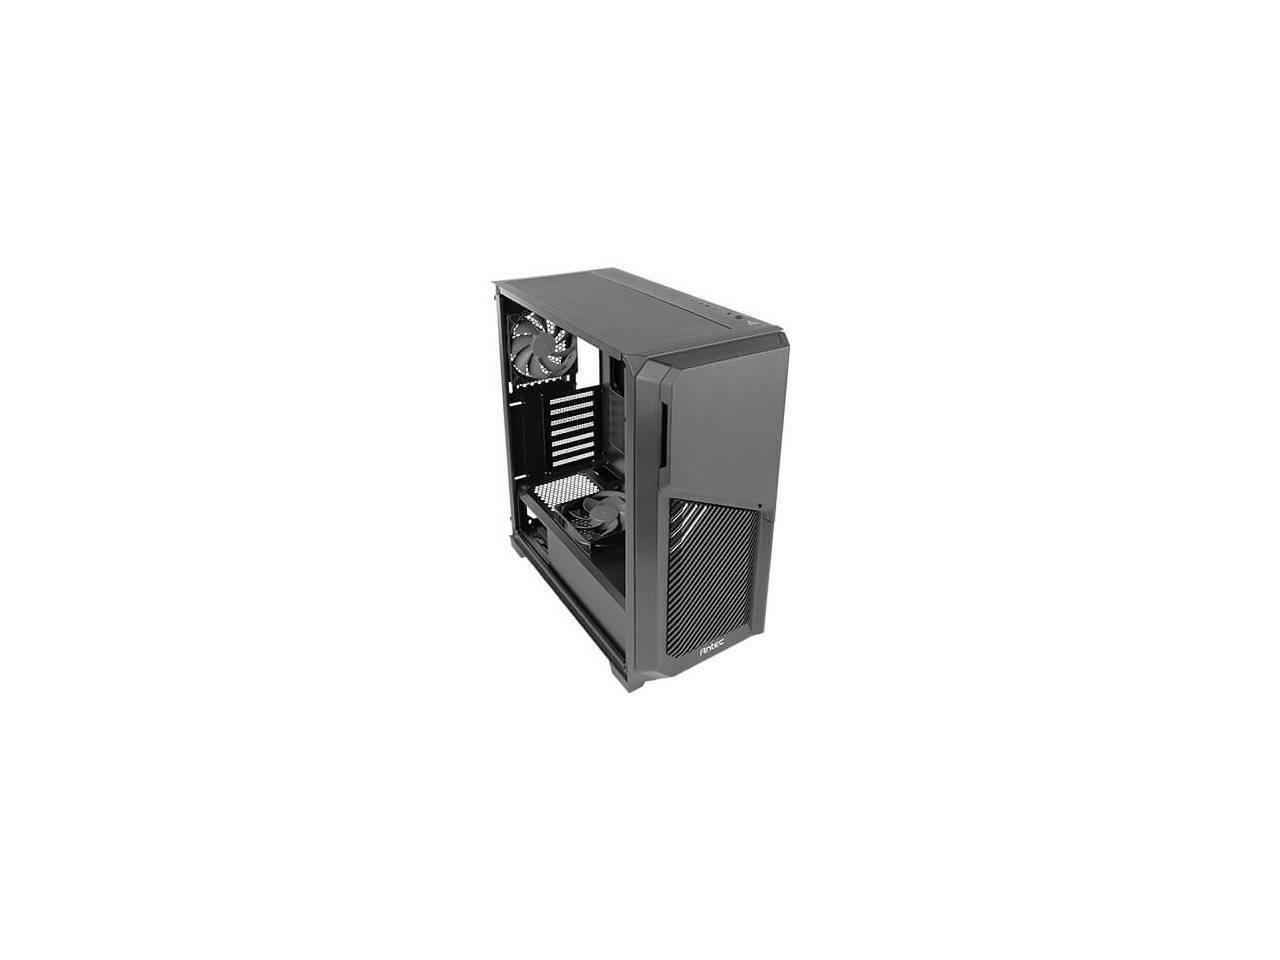 Antec Dark Phantom DP502 FLUX, Mid Tower ATX Gaming Case, Tempered Glass Side